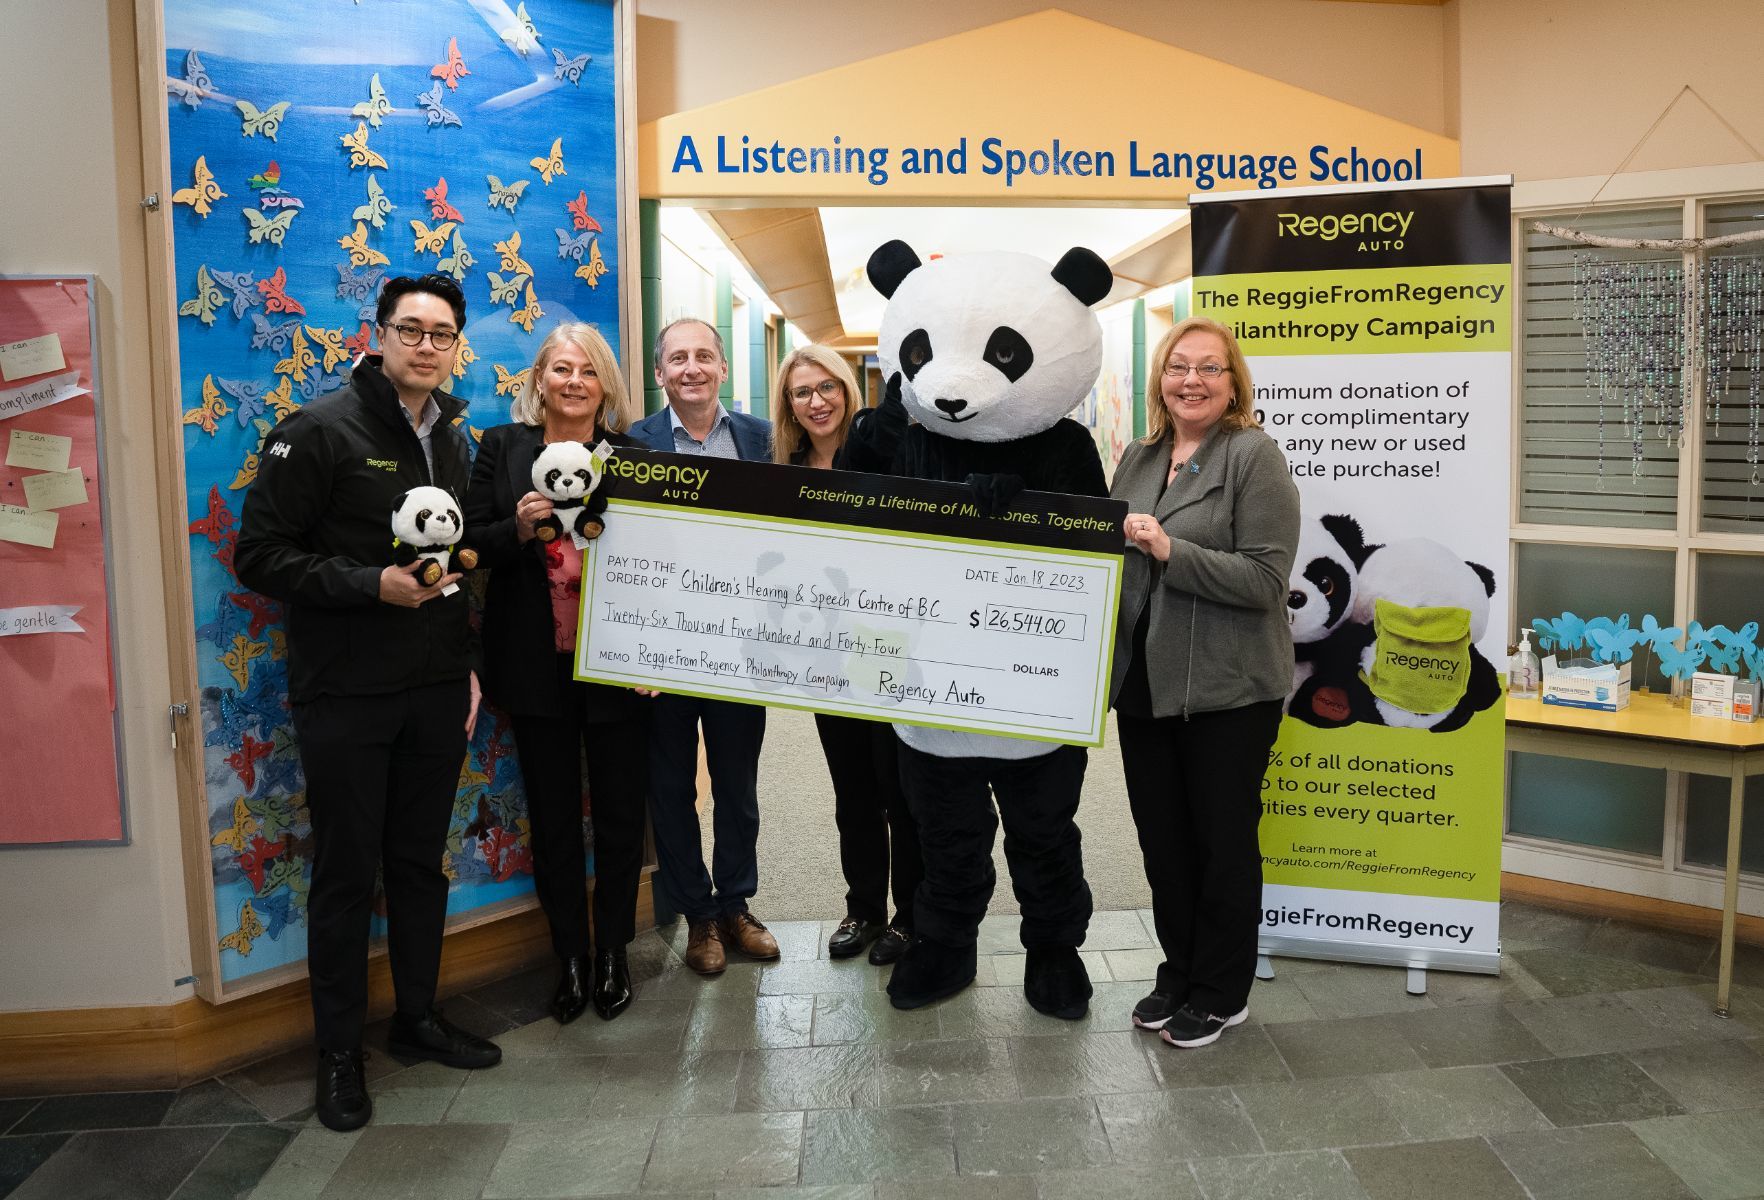 We raised $26,500+ for Children's Hearing & Speech Centre of BC